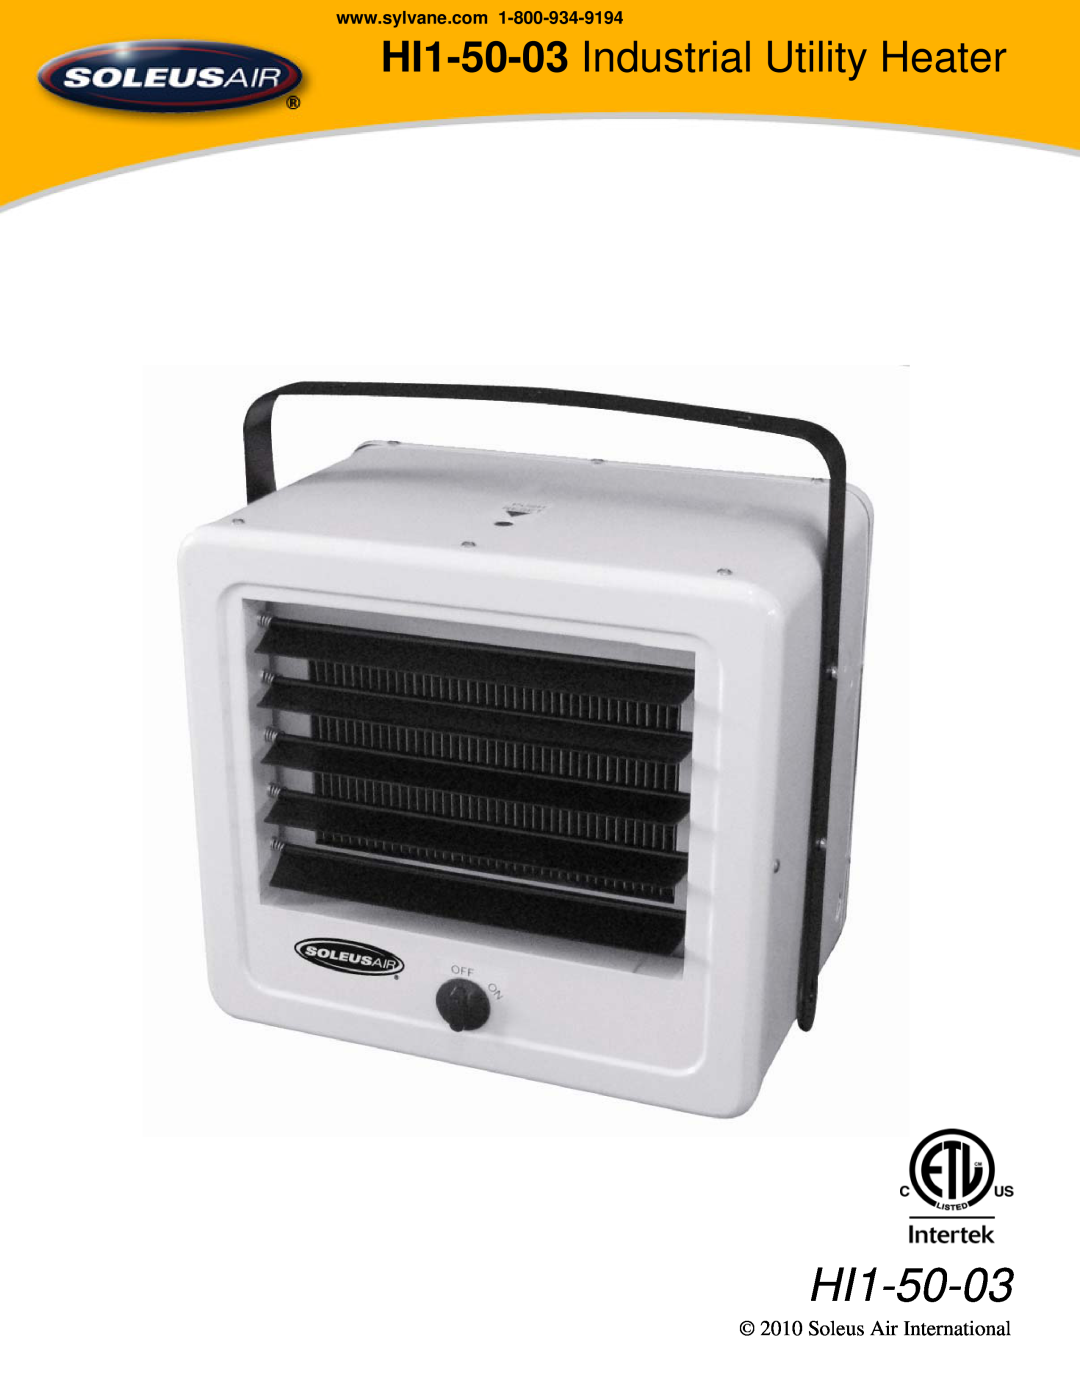 Soleus Air manual HI1-50-03 Industrial Utility Heater 